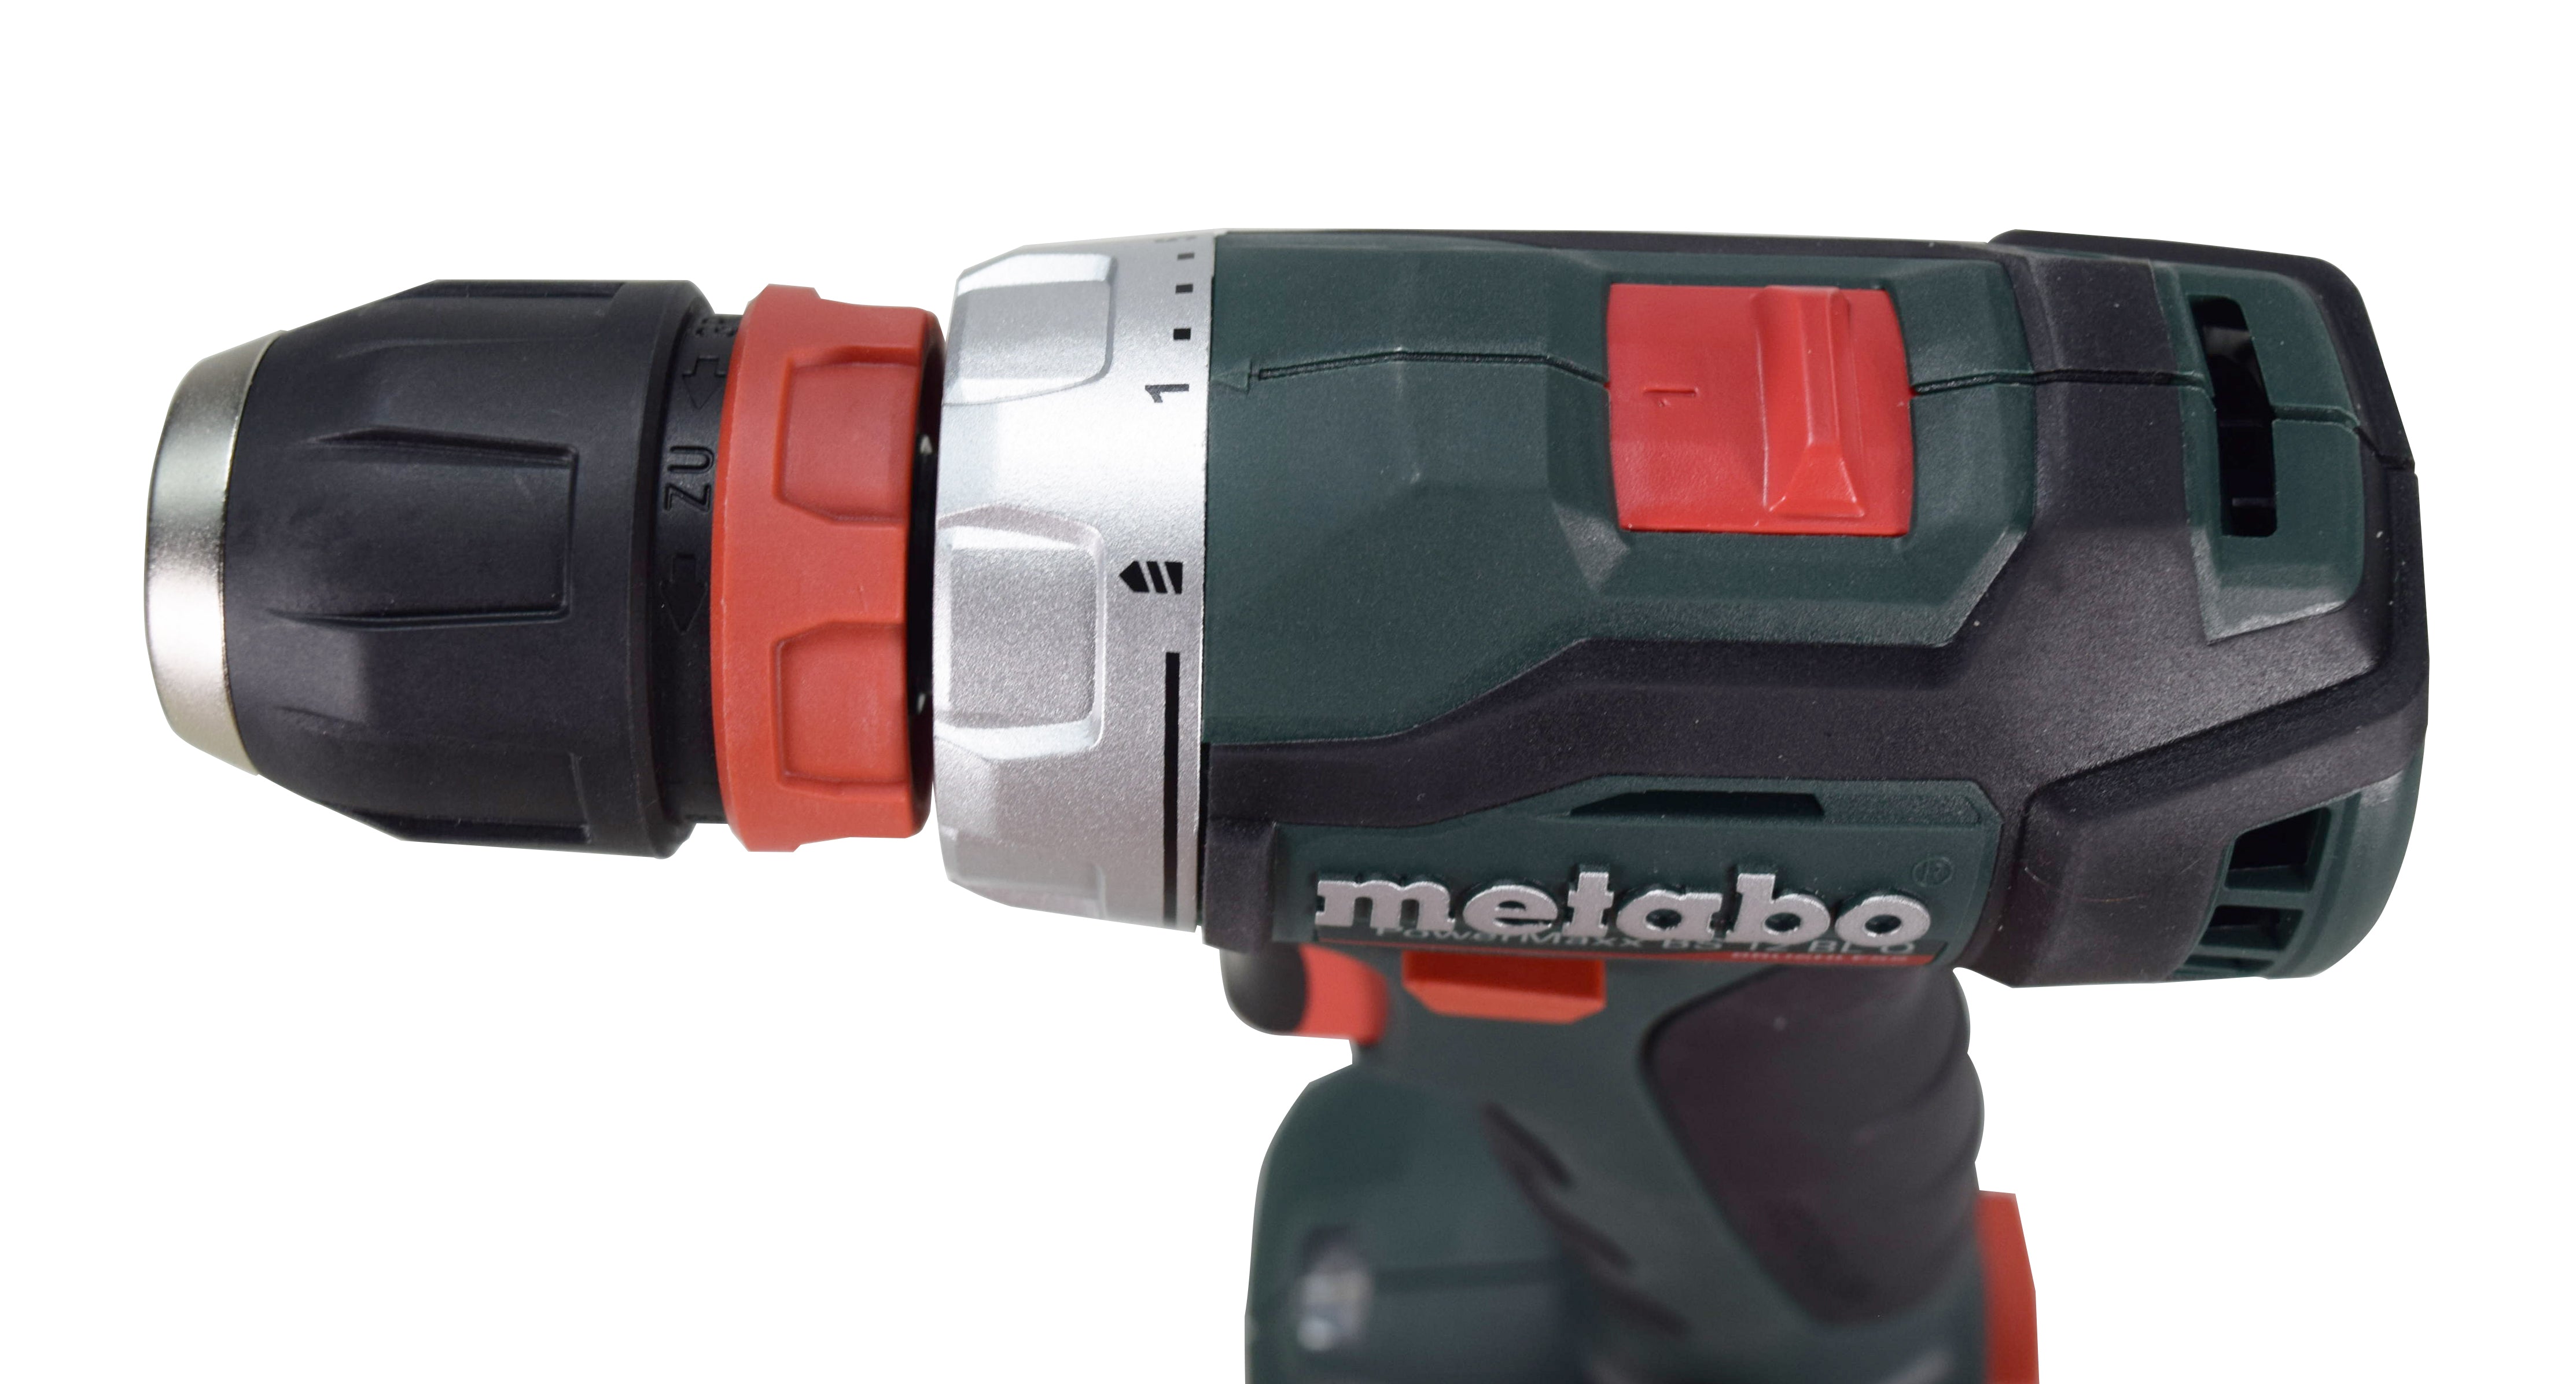 Metabo 601039890 12V PowerMaxx Compact Brushless/Cordless, Drill/Driver